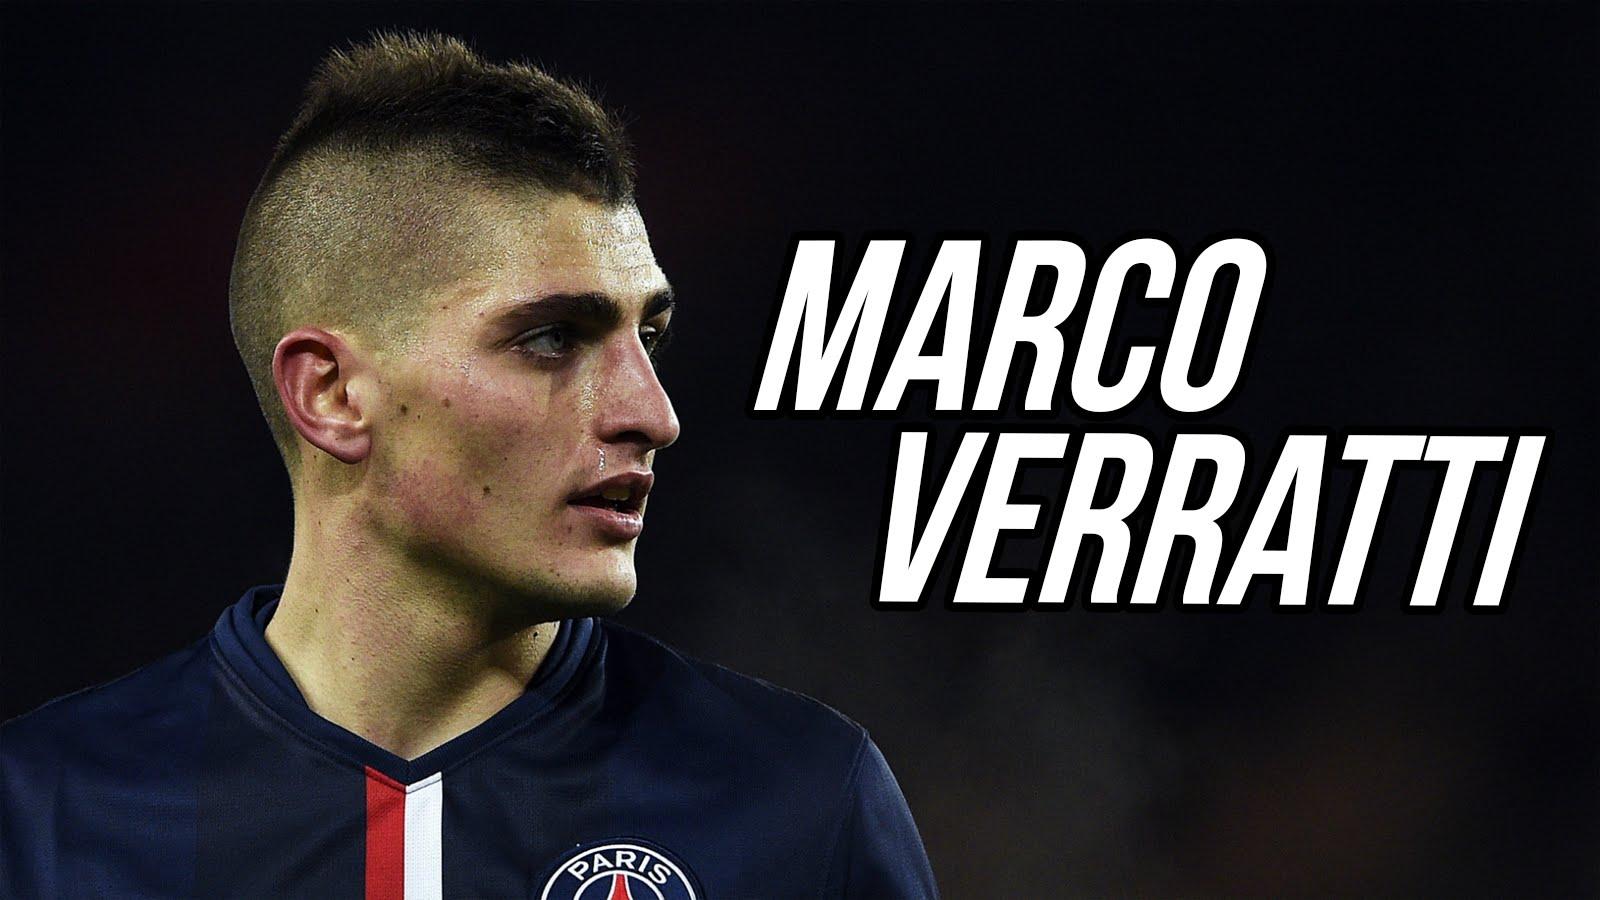 Marco Verratti Saint Germain, Assists & Goals